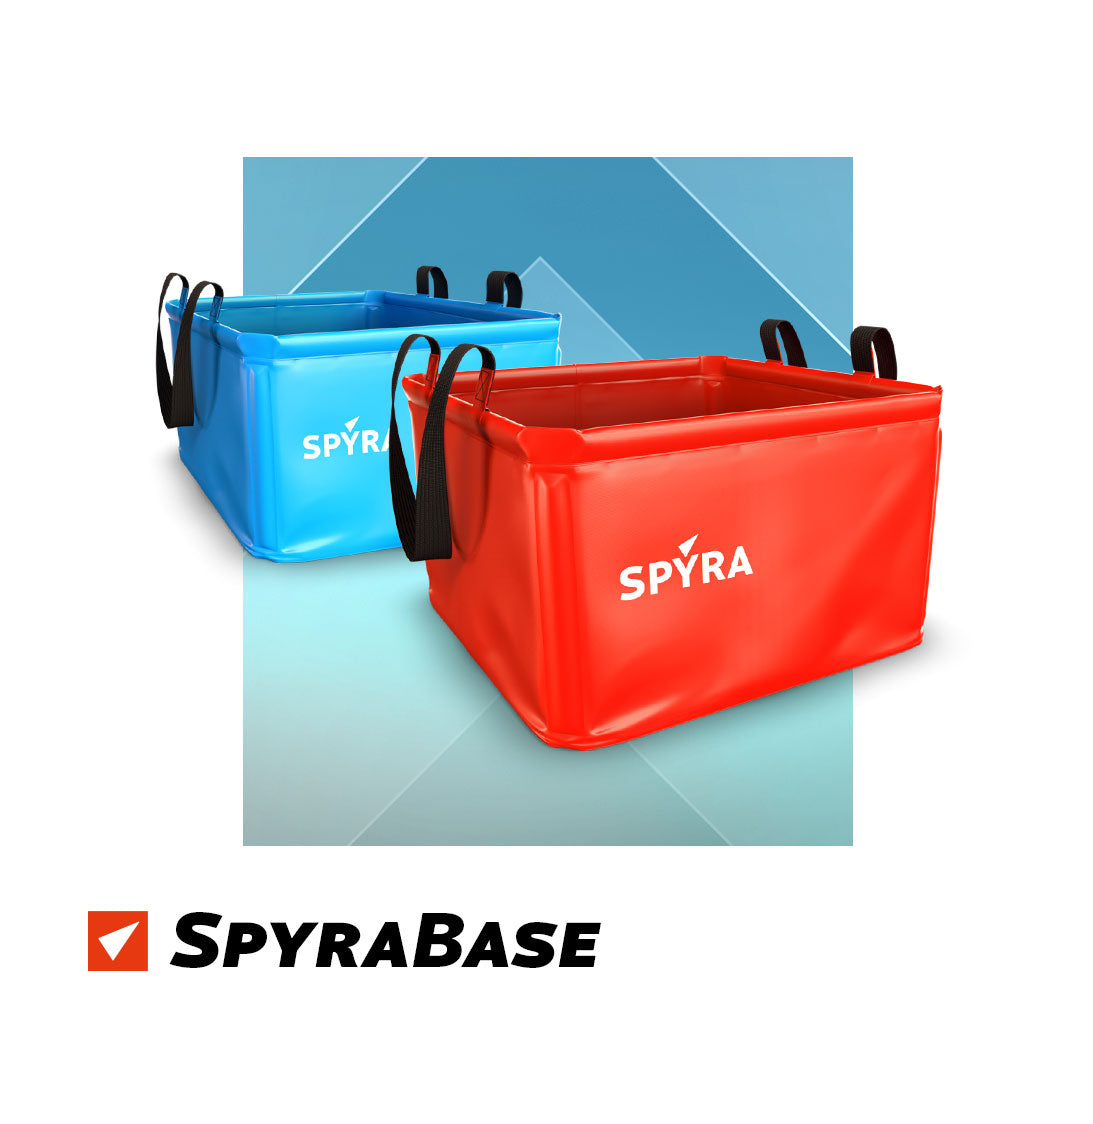 SPYRA – SpyraLX WaterBlaster Blue (Non-Electronic) – Super Powerful,  Rapid-Fire, Instant Action Premium Water Gun